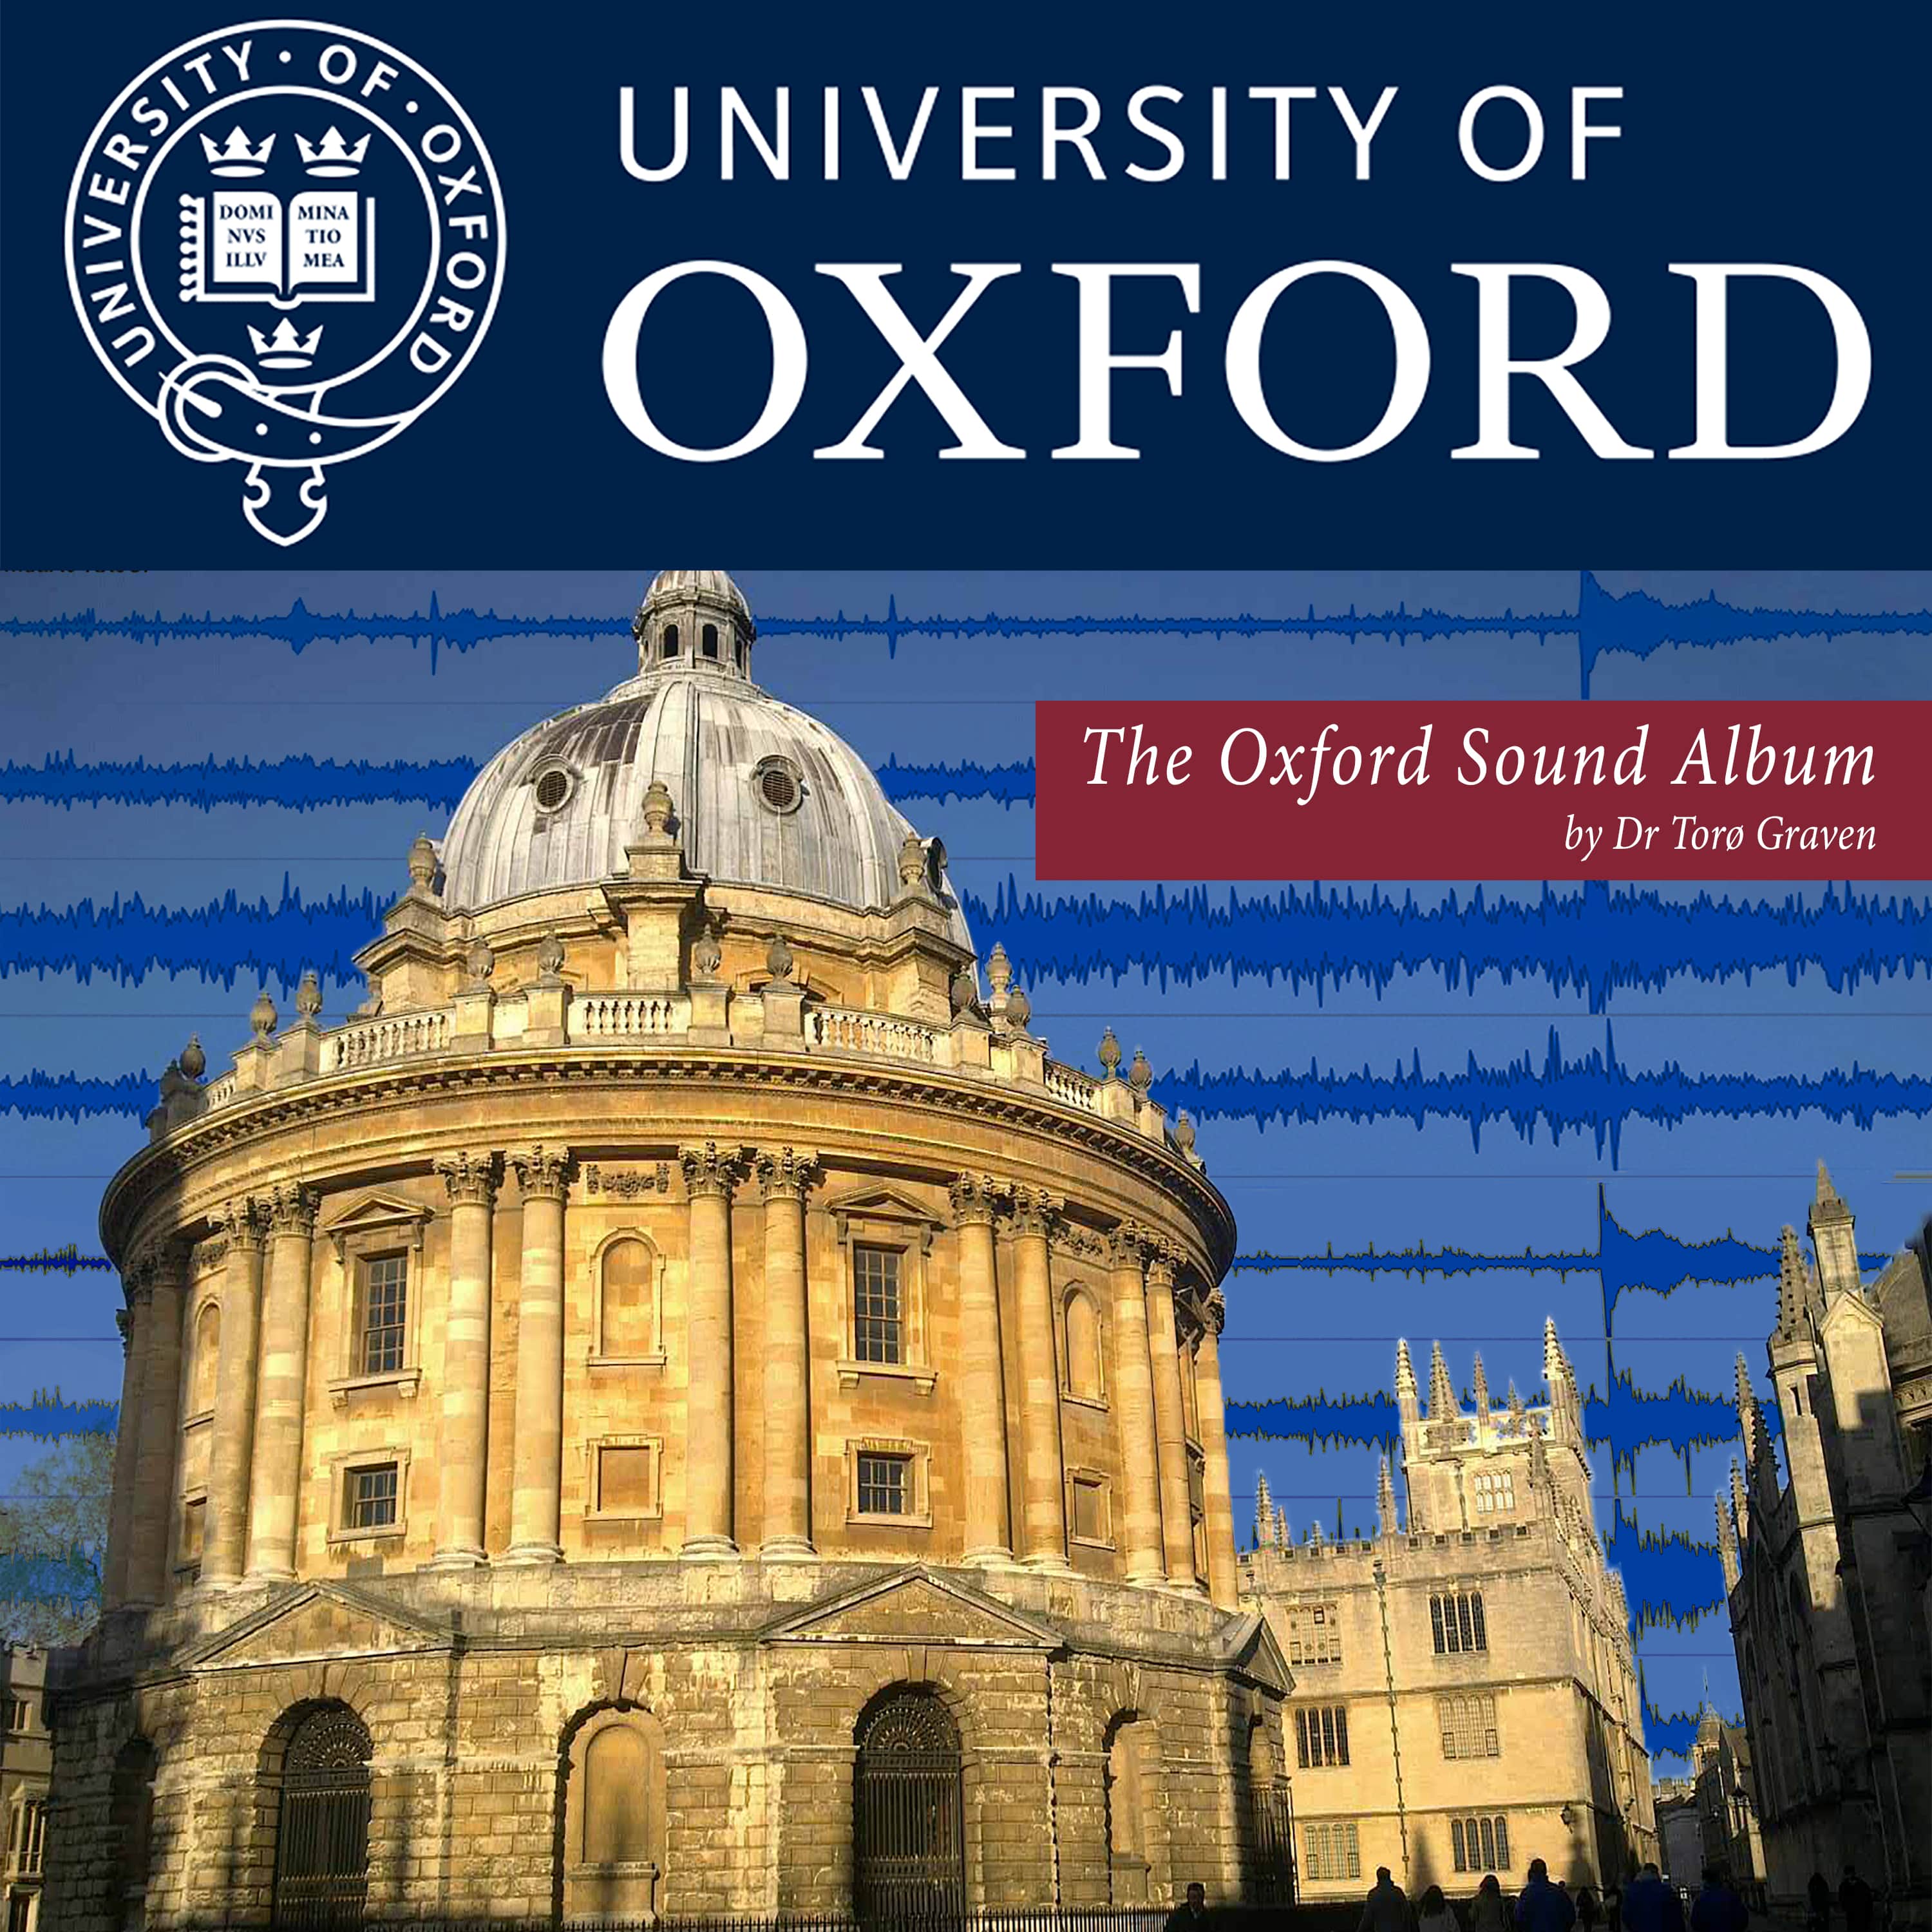 The Oxford Sound Album – produced by Dr Torø Graven